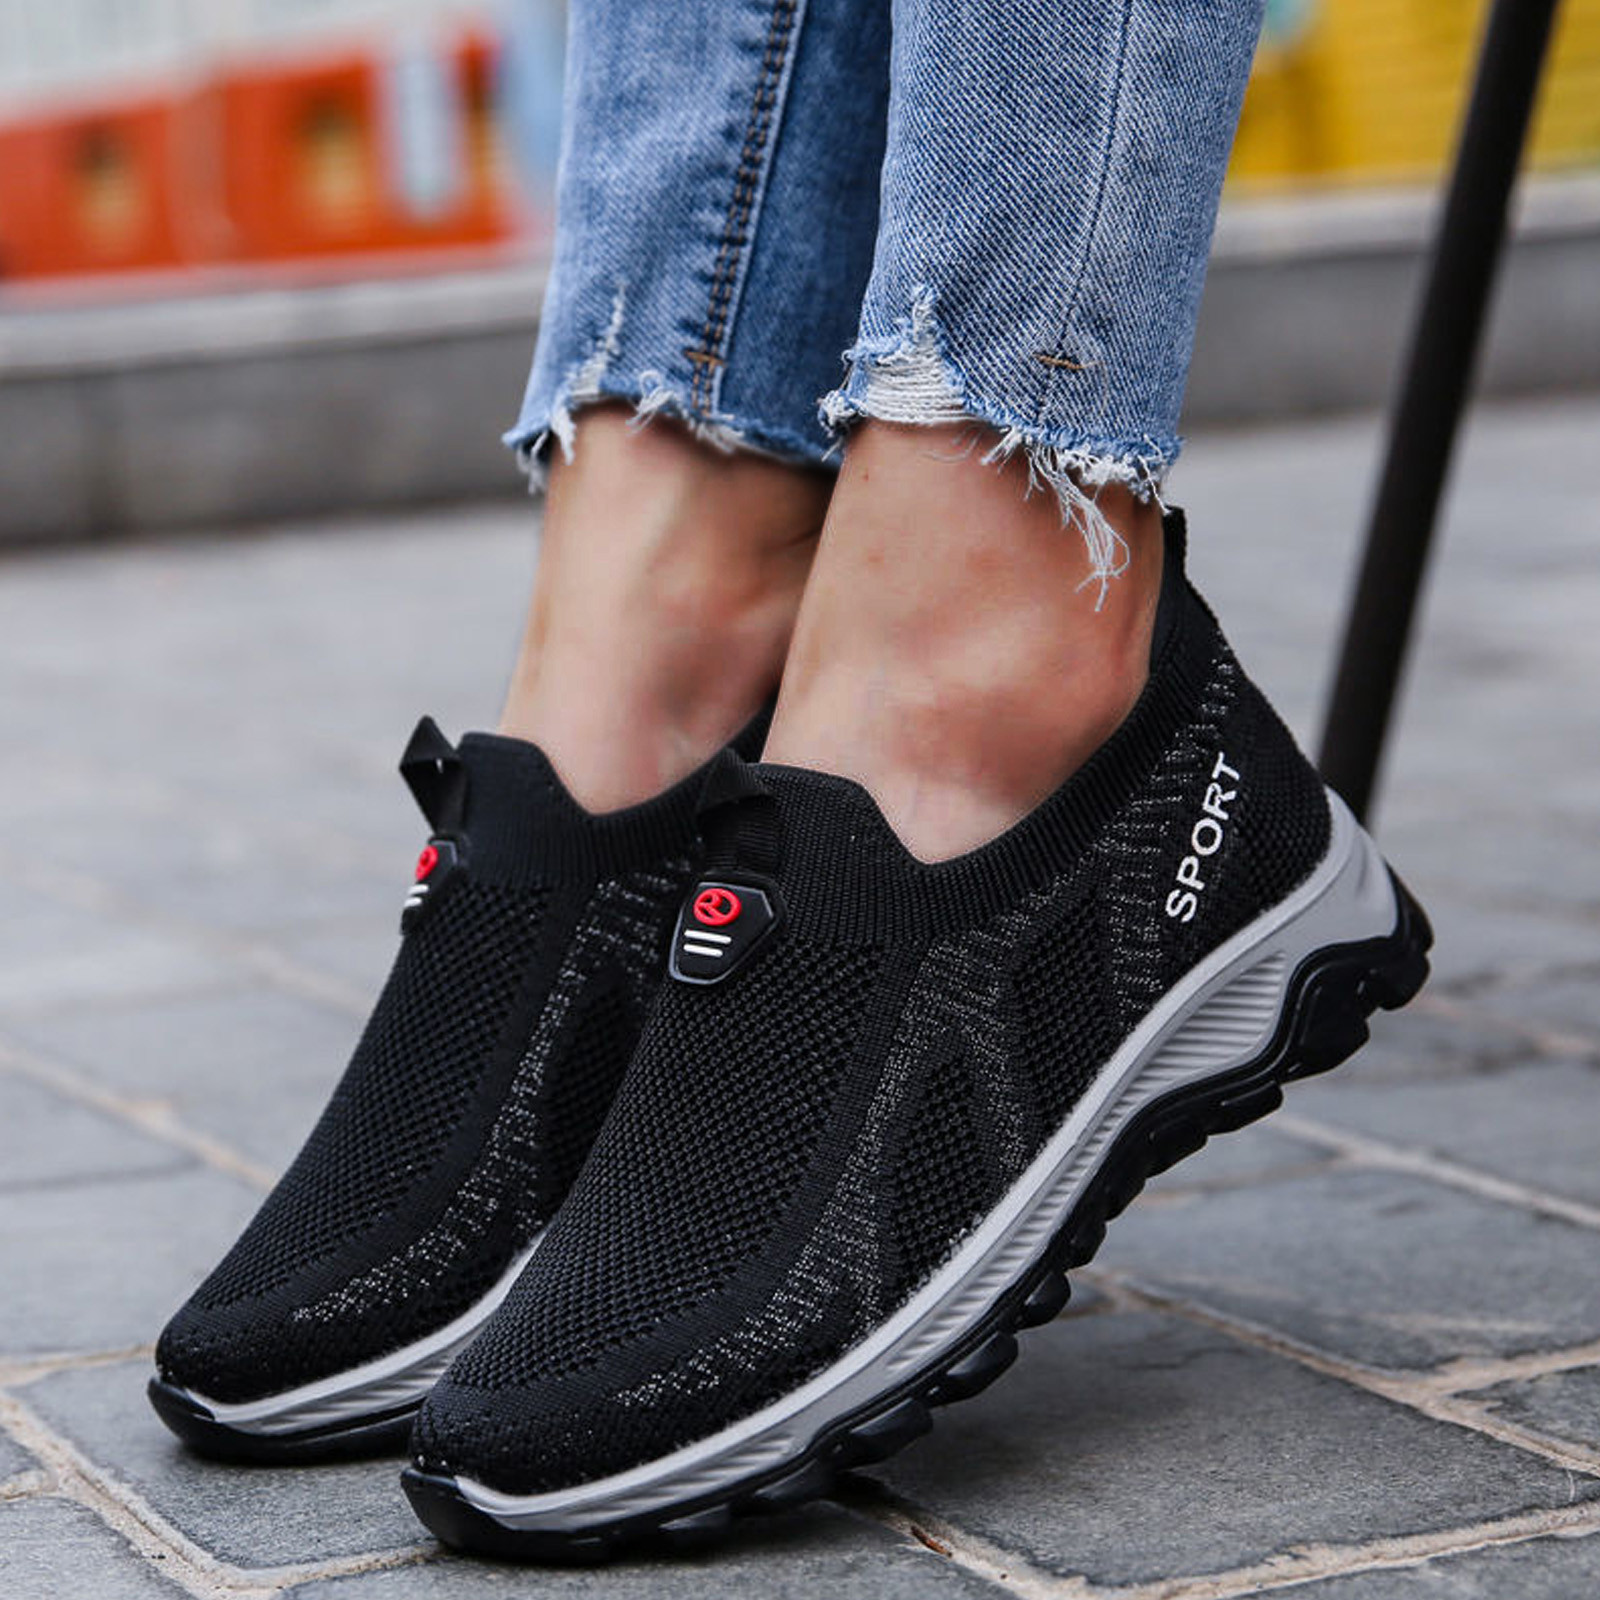 dmqupv Womens Comfort Shoes Womens Casual Shoes Size 8 Black Sneaker For Women Mesh Running Shoes Tennis Man Casual Shoe Black 6.5 - image 2 of 5